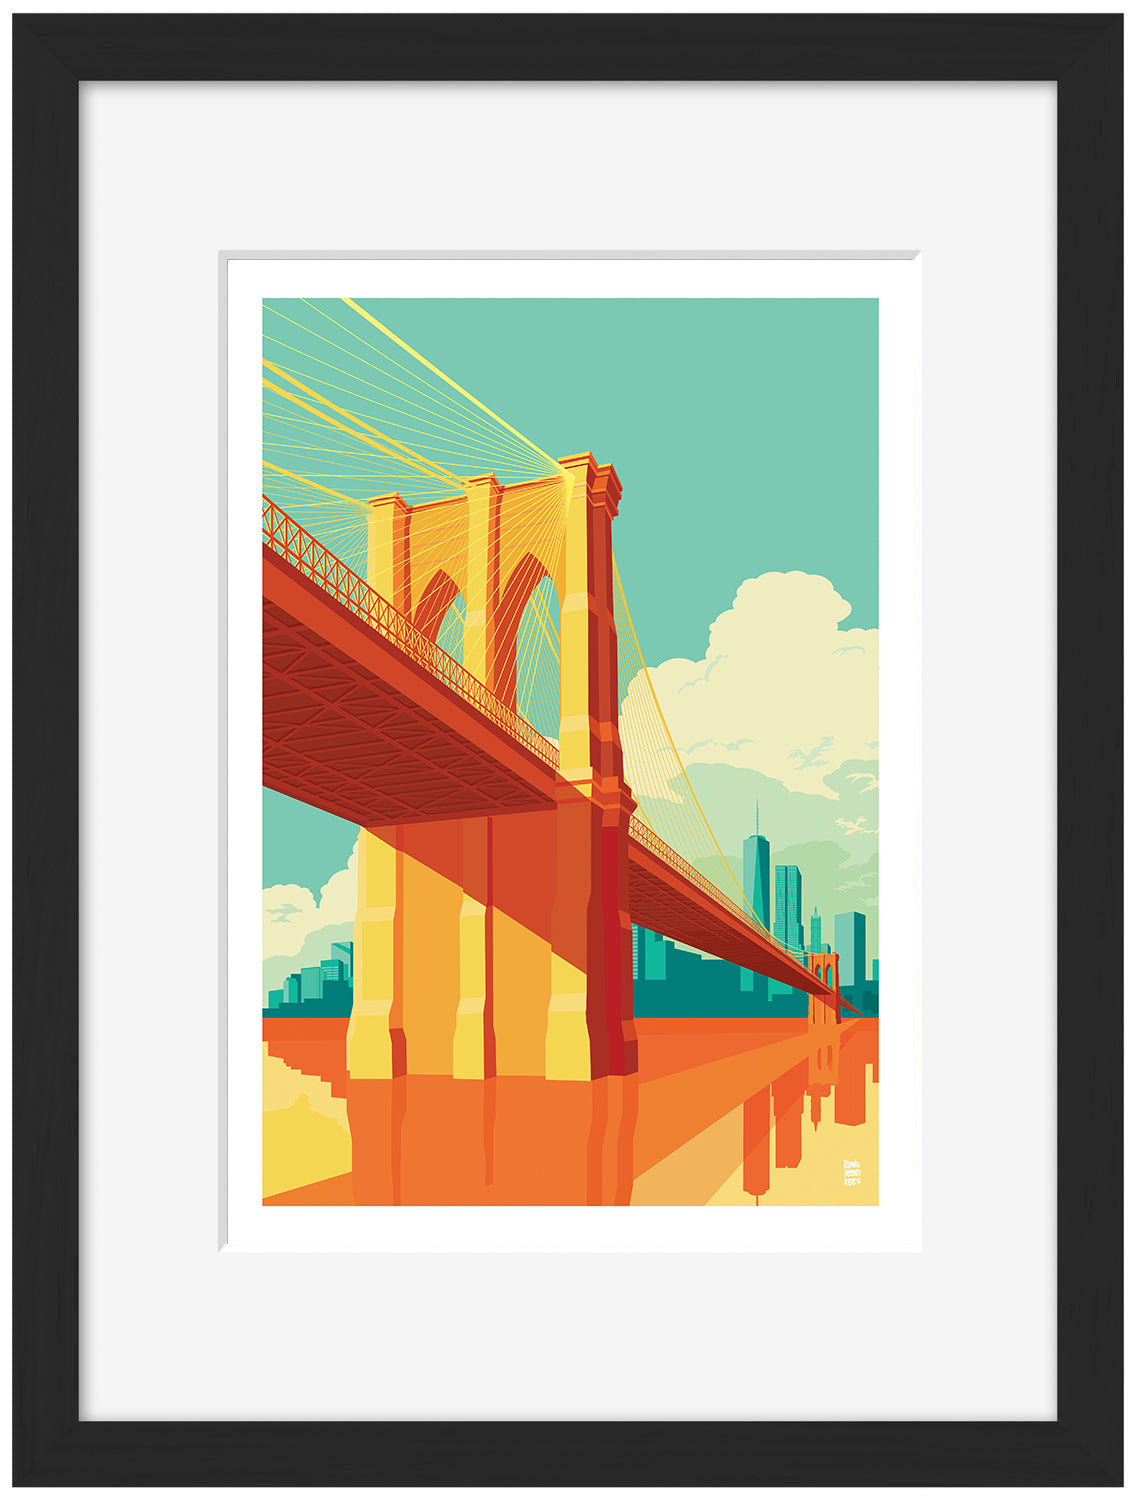 NYC Brooklyn Bridge-print, remko-heemskerk-Framed Print-30 x 40 cm-BLUE SHAKER